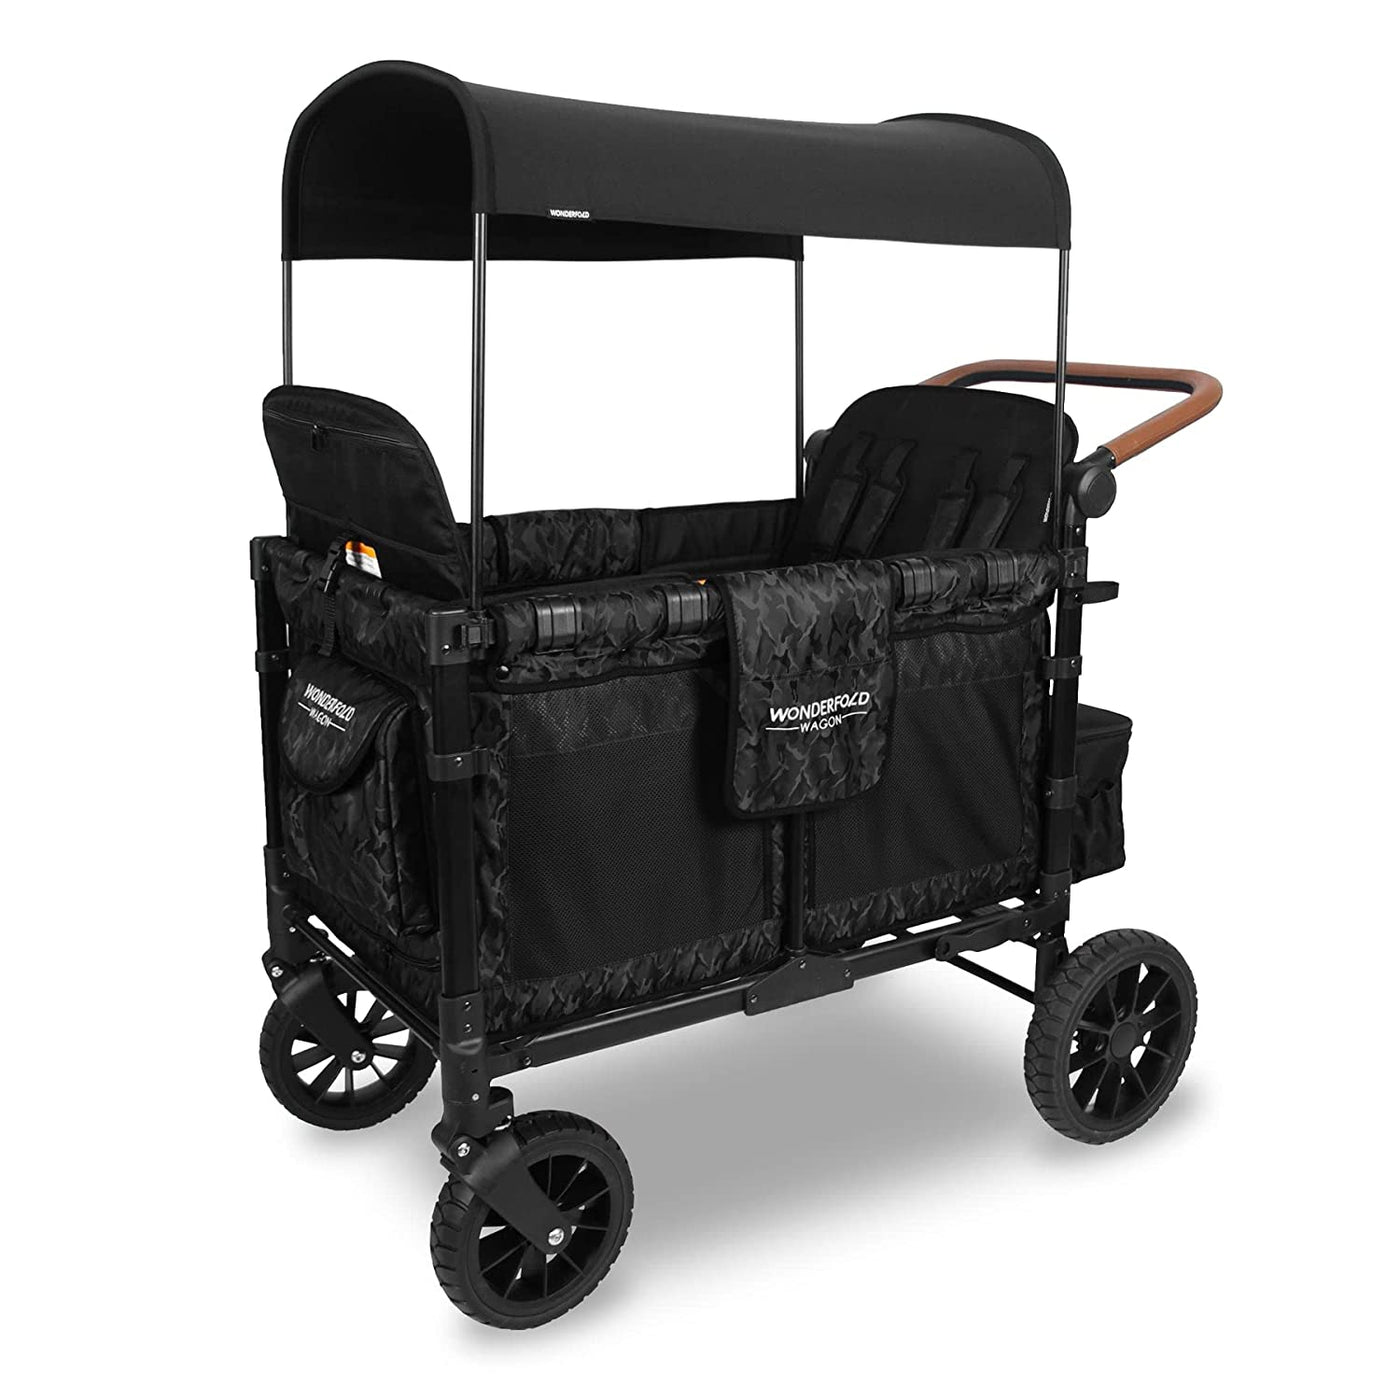 Wonderfold Wagon W4 Luxe Quad Stroller Wagon (4 Seater) - Black Camo